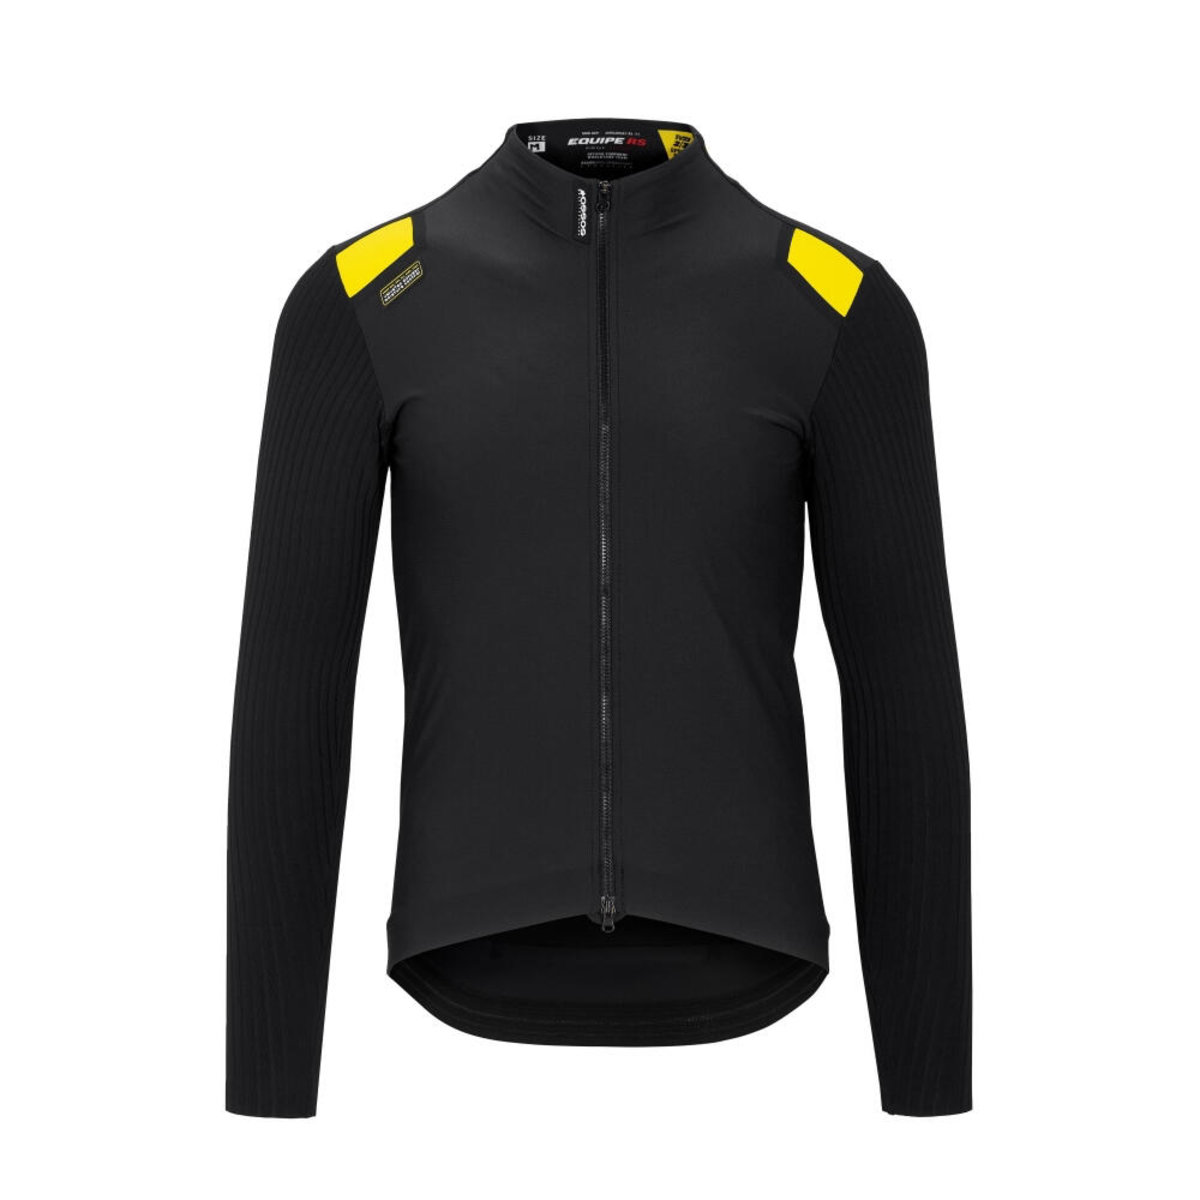 Куртка ASSOS Equipe RS Spring Fall Jacket, довг. рукав, чоловіча, чорна з жовтим, S фото 